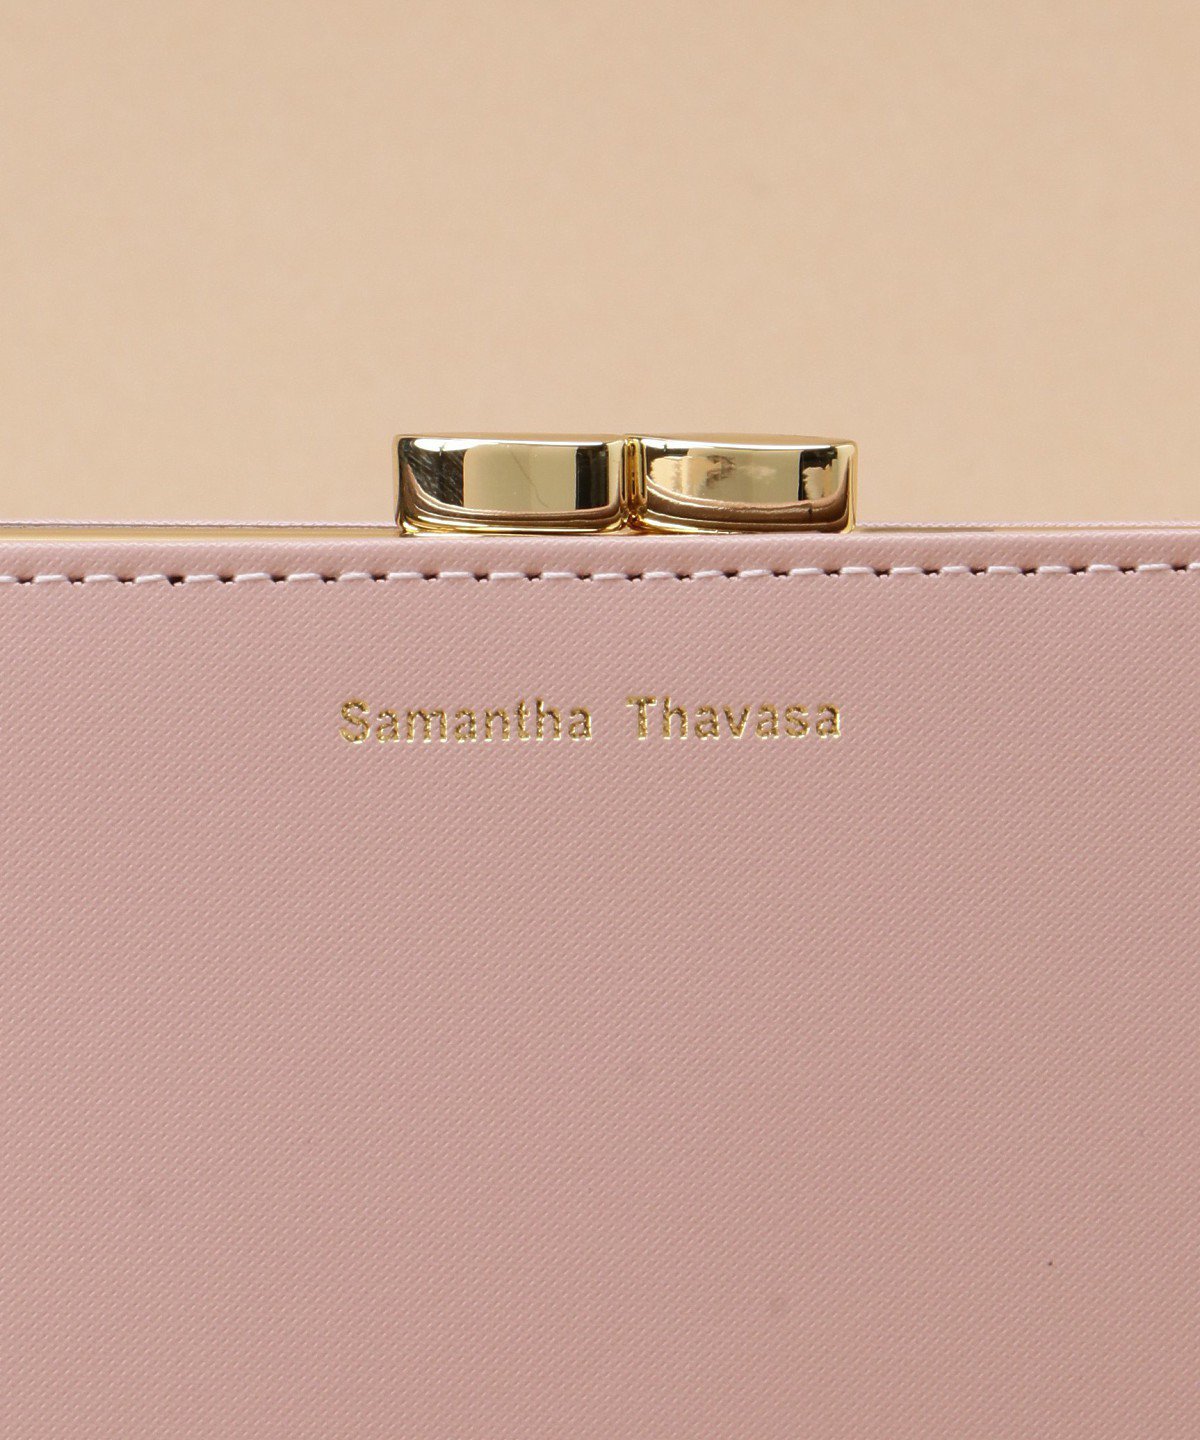 Samantha Thavasa｜スマートバイカラー 口金折財布 | Rakuten Fashion